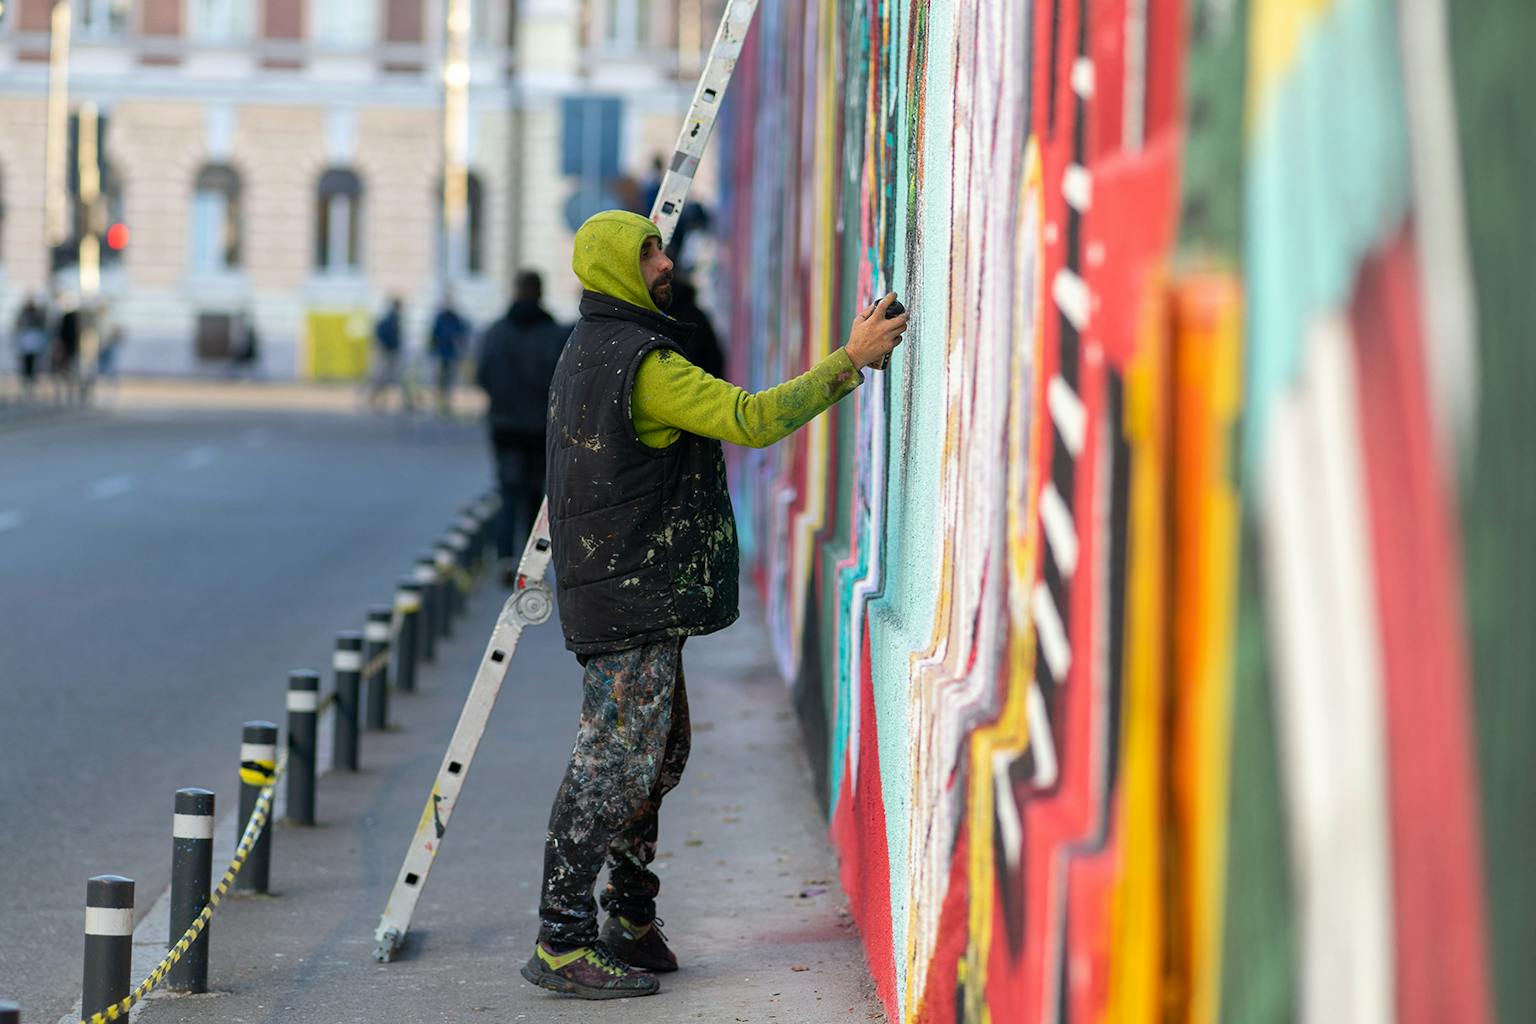 Kero, street artist roumain, peint une fresque murale à la bombe de peinture.